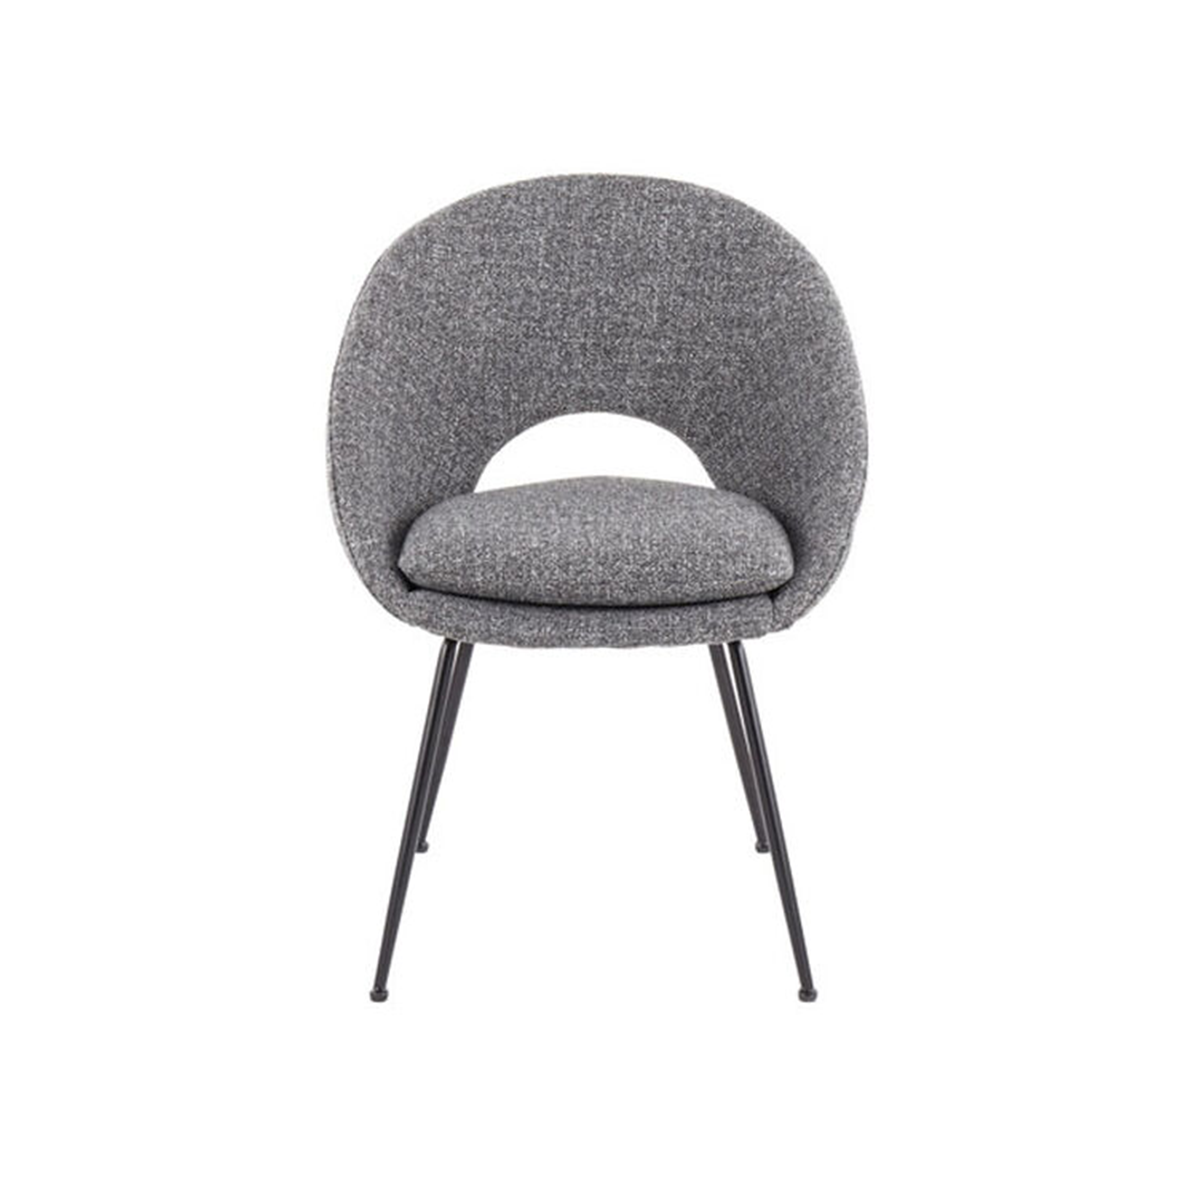 FondHouse Paico Fabric Dining Chair - Black Legs